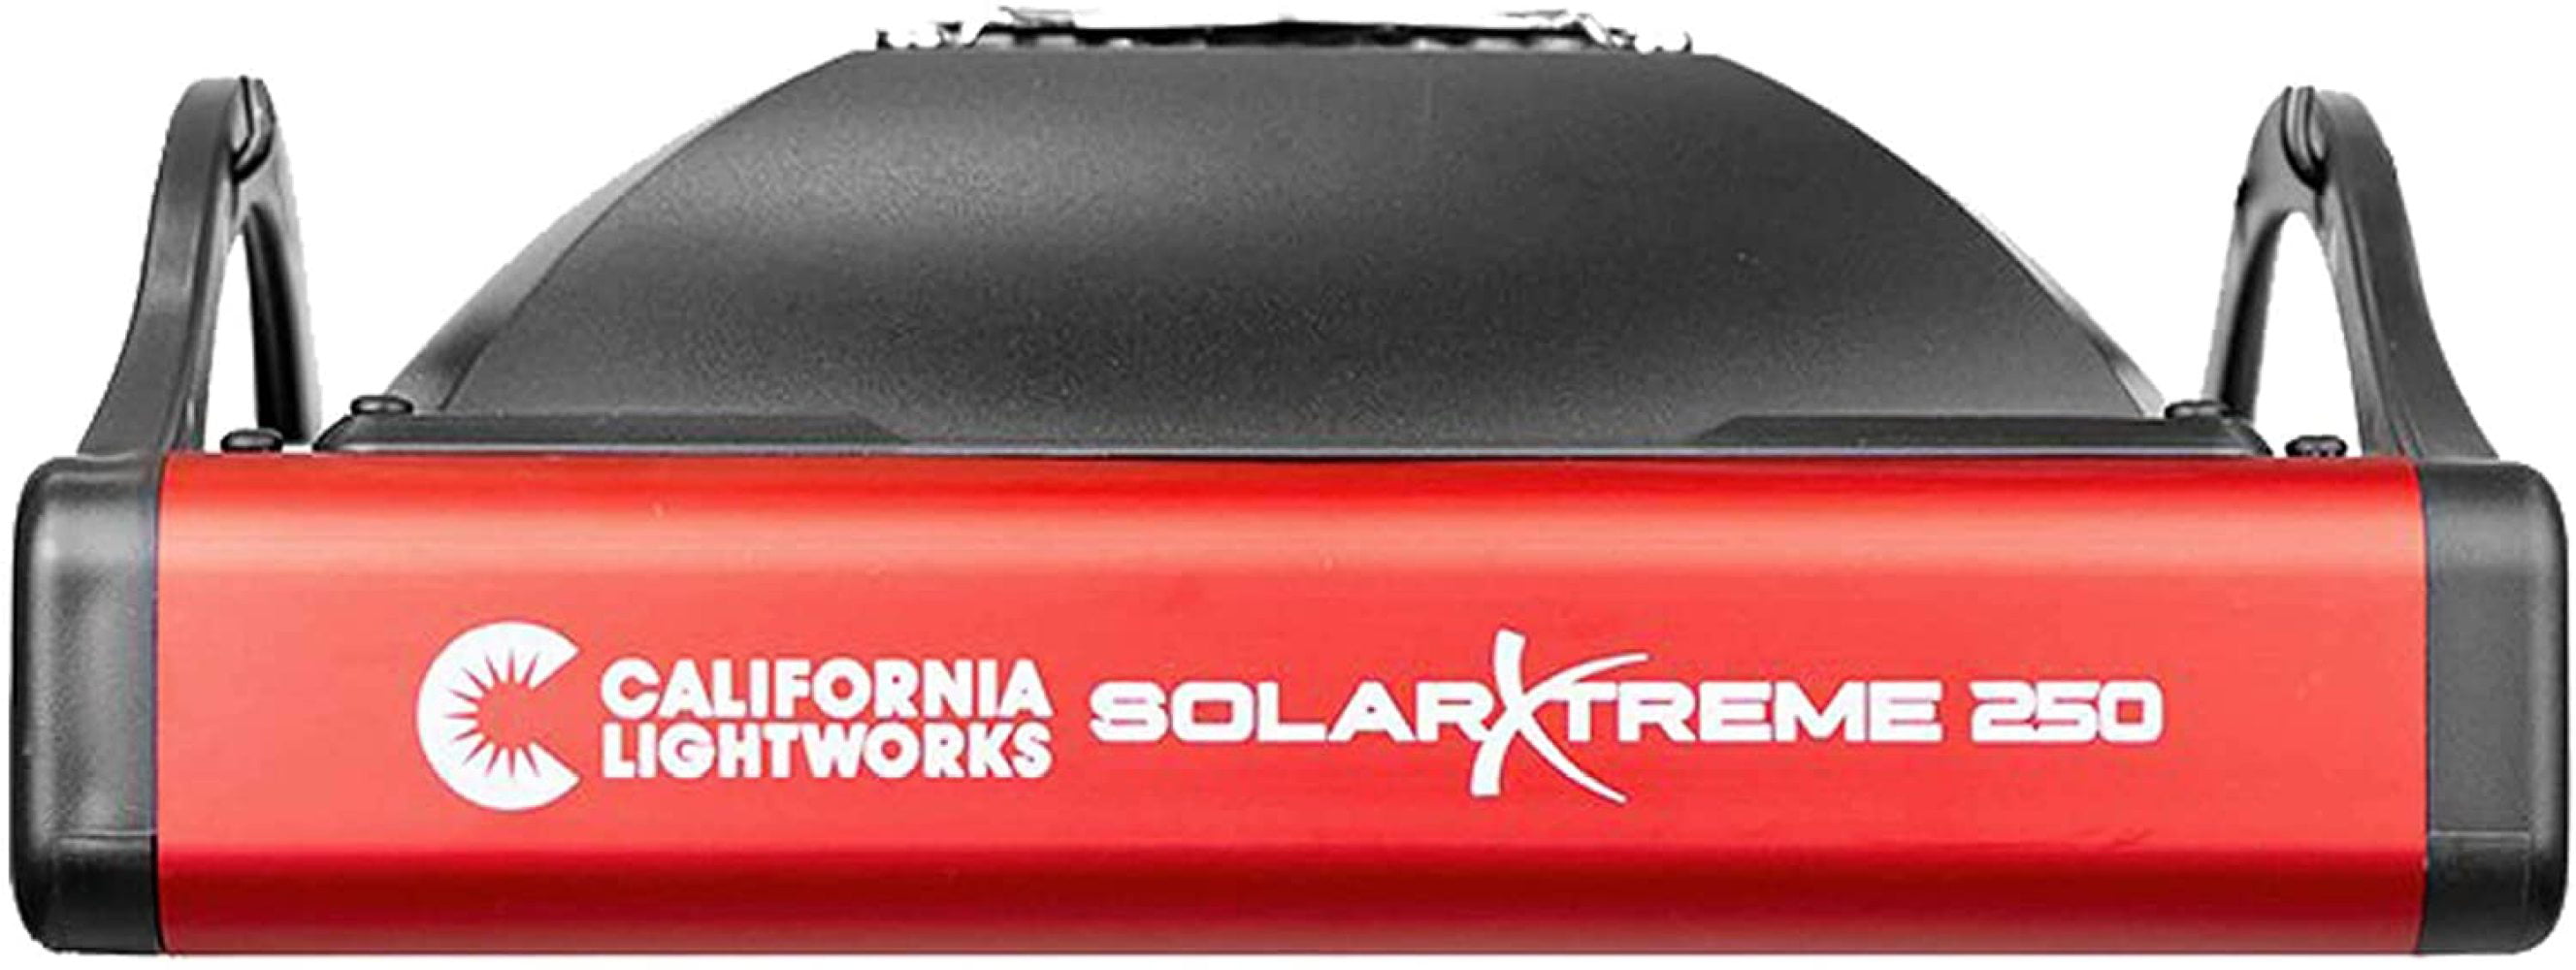 California Light Works SolarXtreme 250 LED Grow Light  Full Cycle Sun Spectrum 